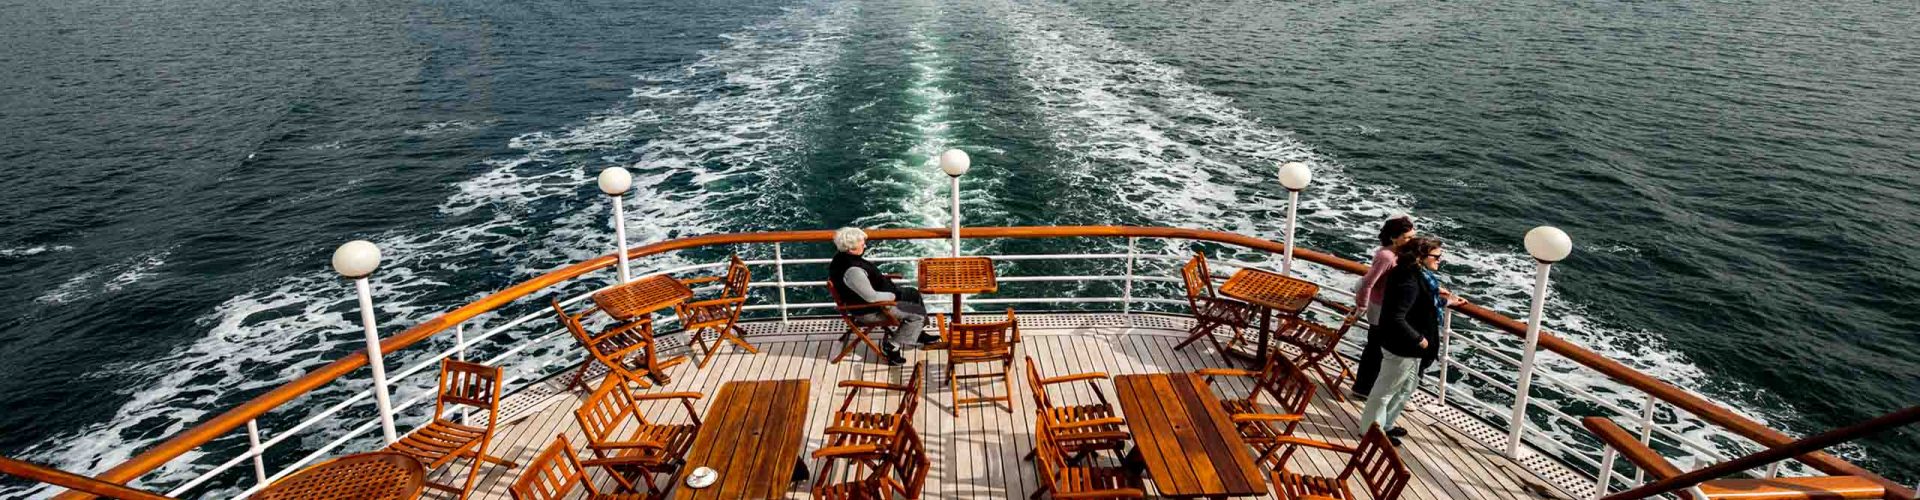 The outdoor seating area on the Promenade Deck on the Hebridean Princess cruise ship of Hebridean Island Cruises